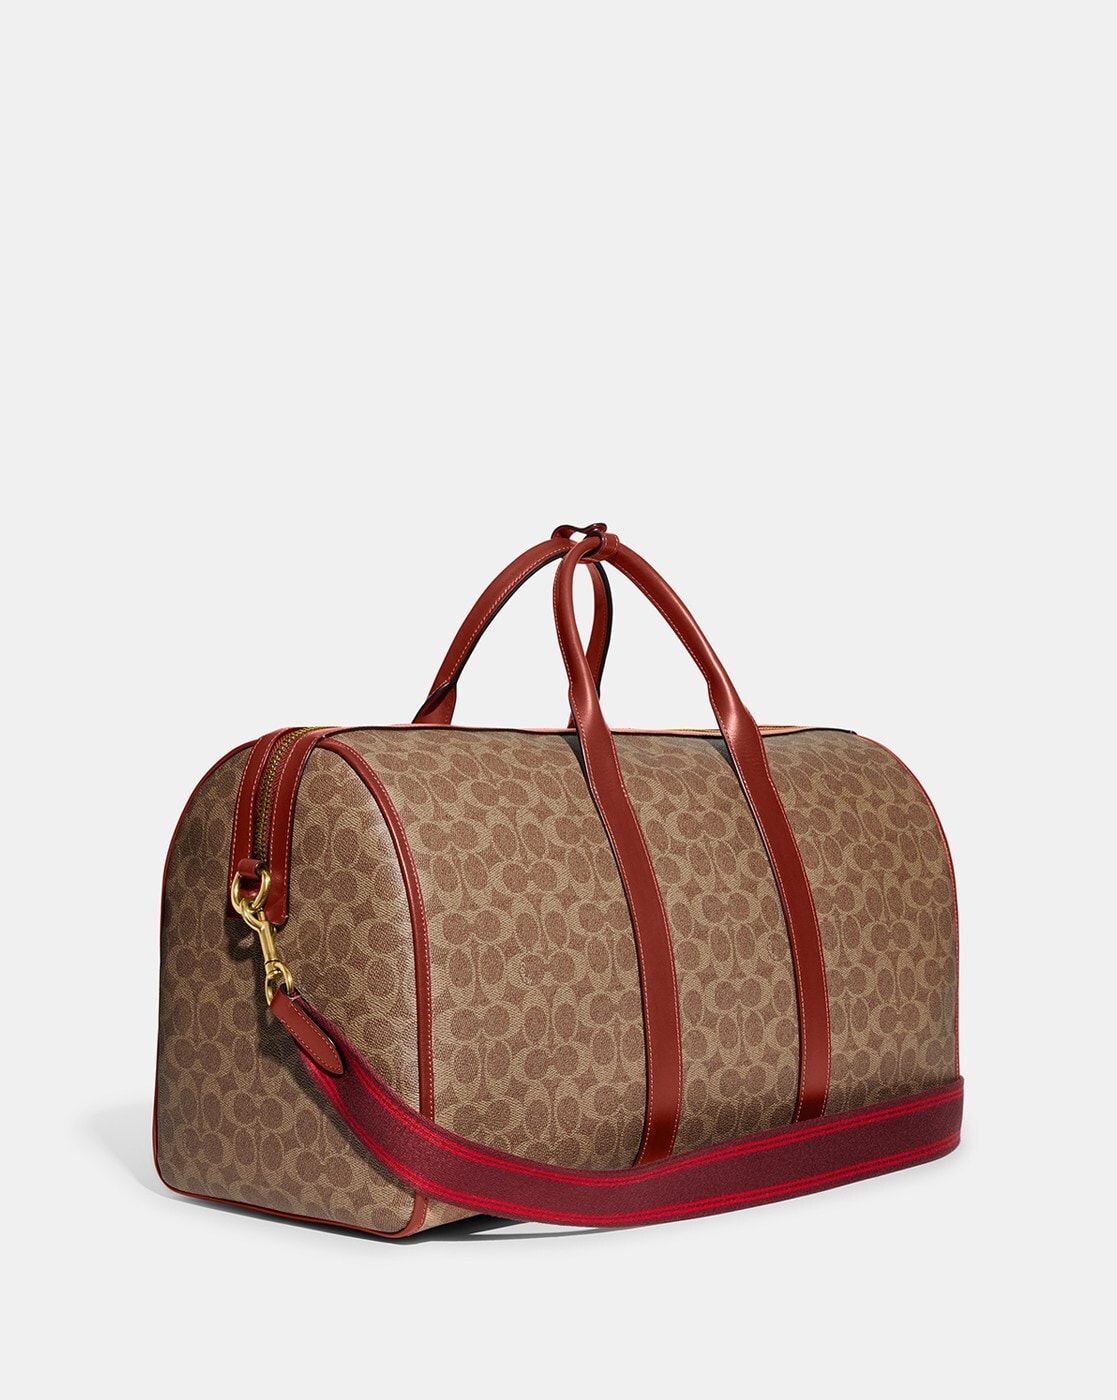 NEW Gucci x Disney Monogram Duffle Travel Bag - Beige/Ebony